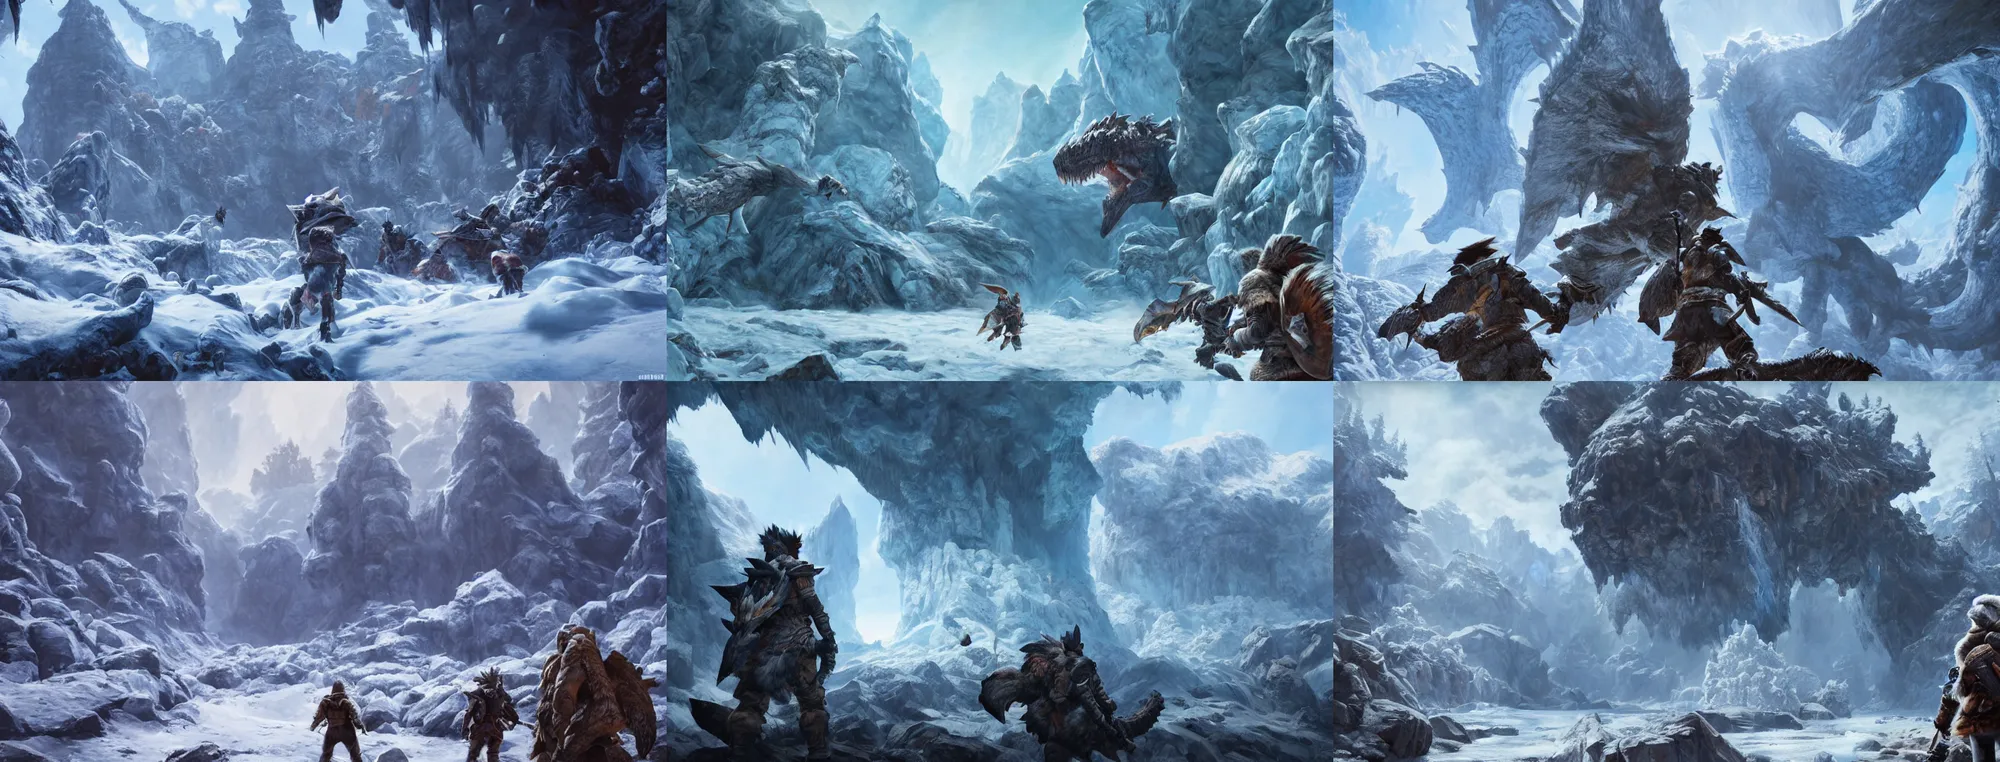 Prompt: Monster Hunter glacier cave, gameplay screenshot, Unreal Engine (2020), oil on canvas by Ivan Shishkin